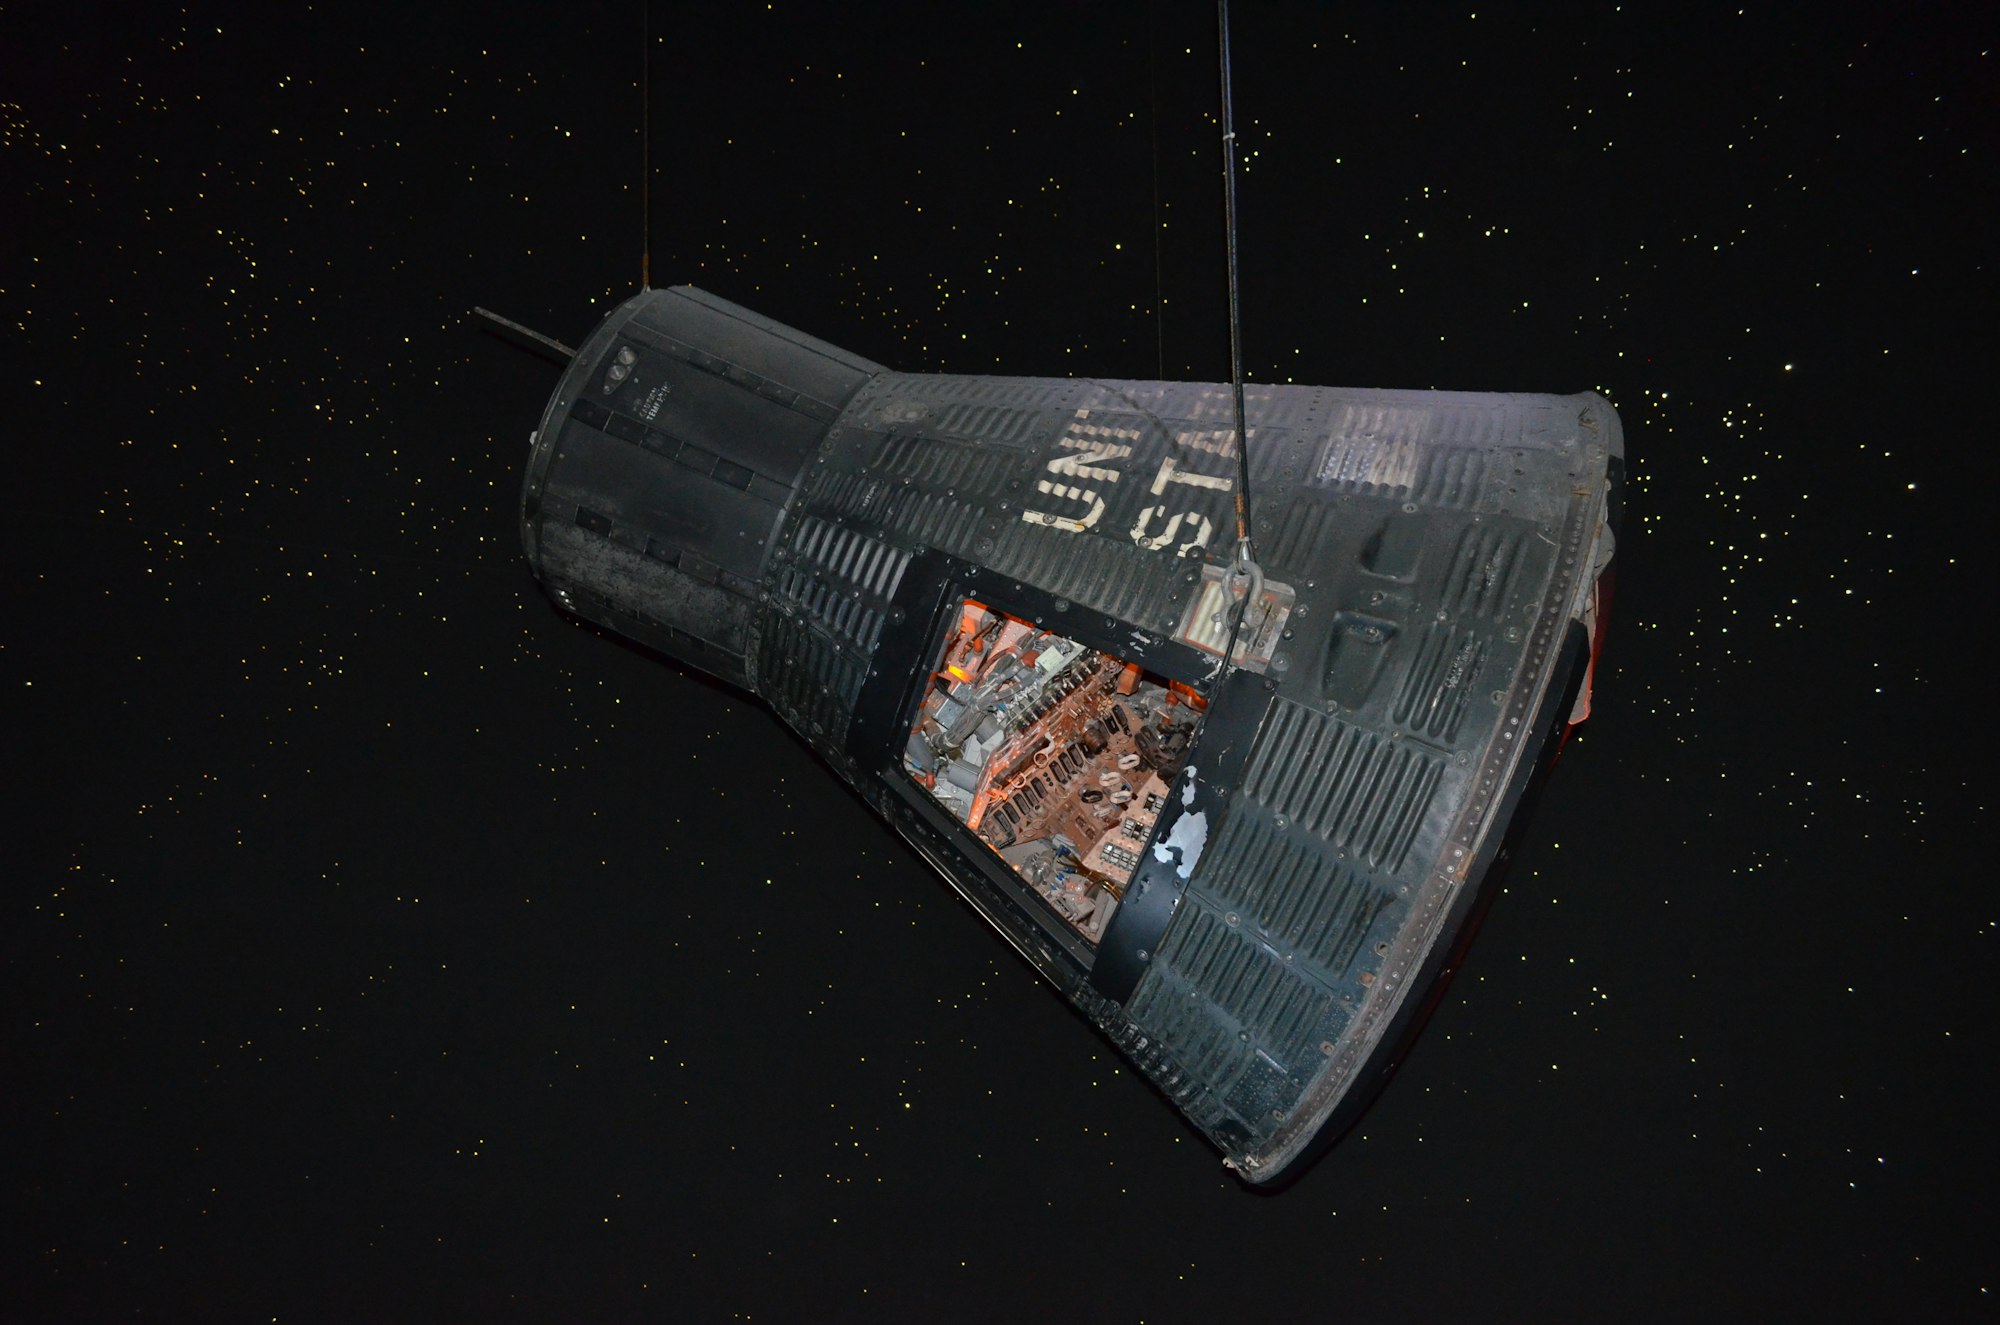 Qosmosys raises $100 million for its space transportation vehicle